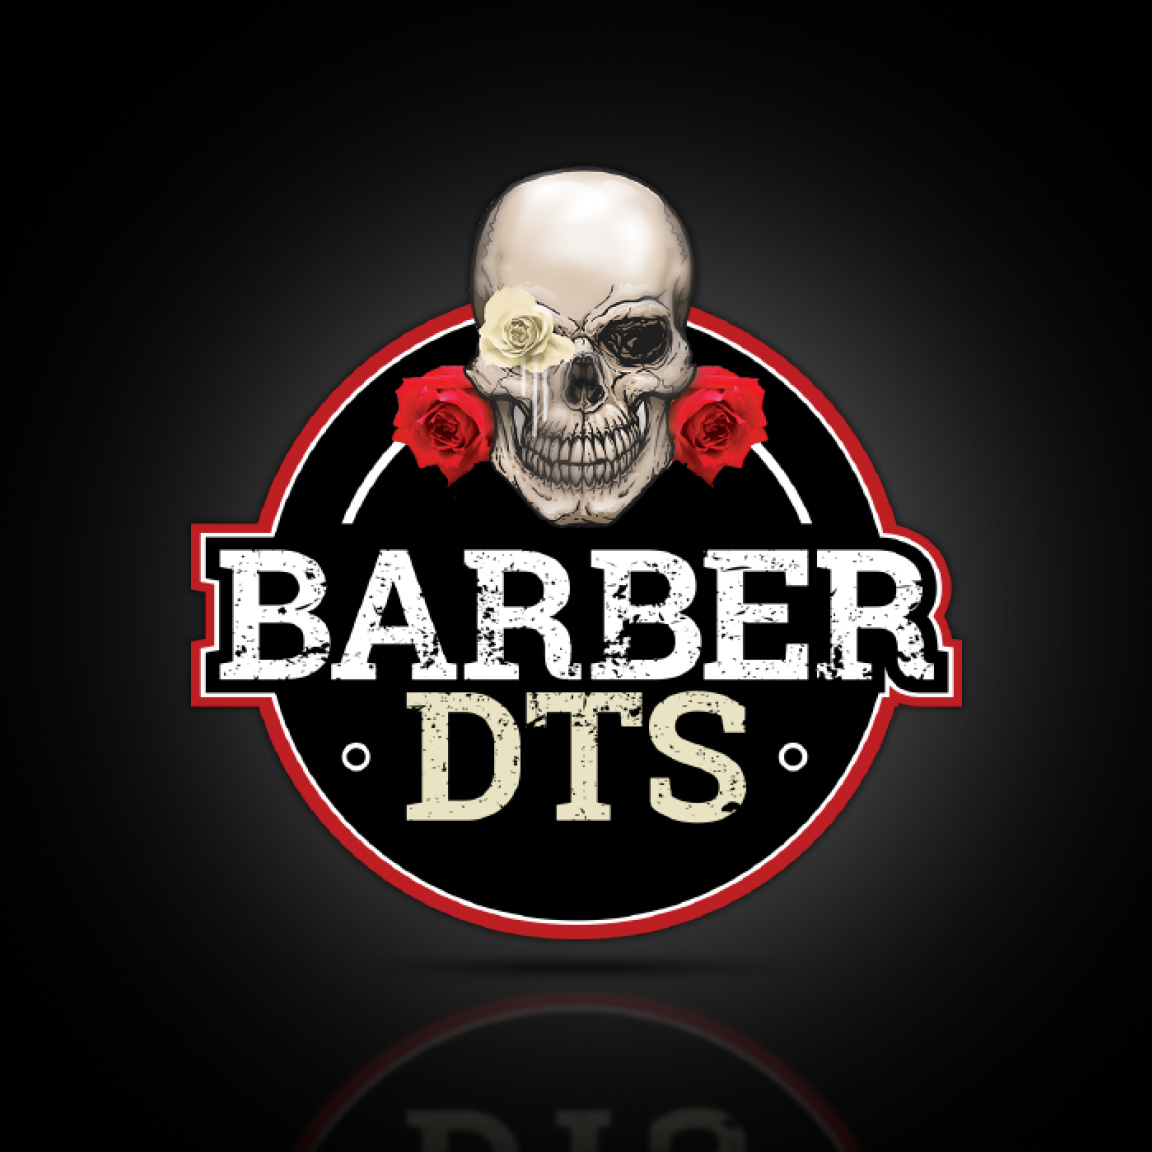 Barber DTS - A History